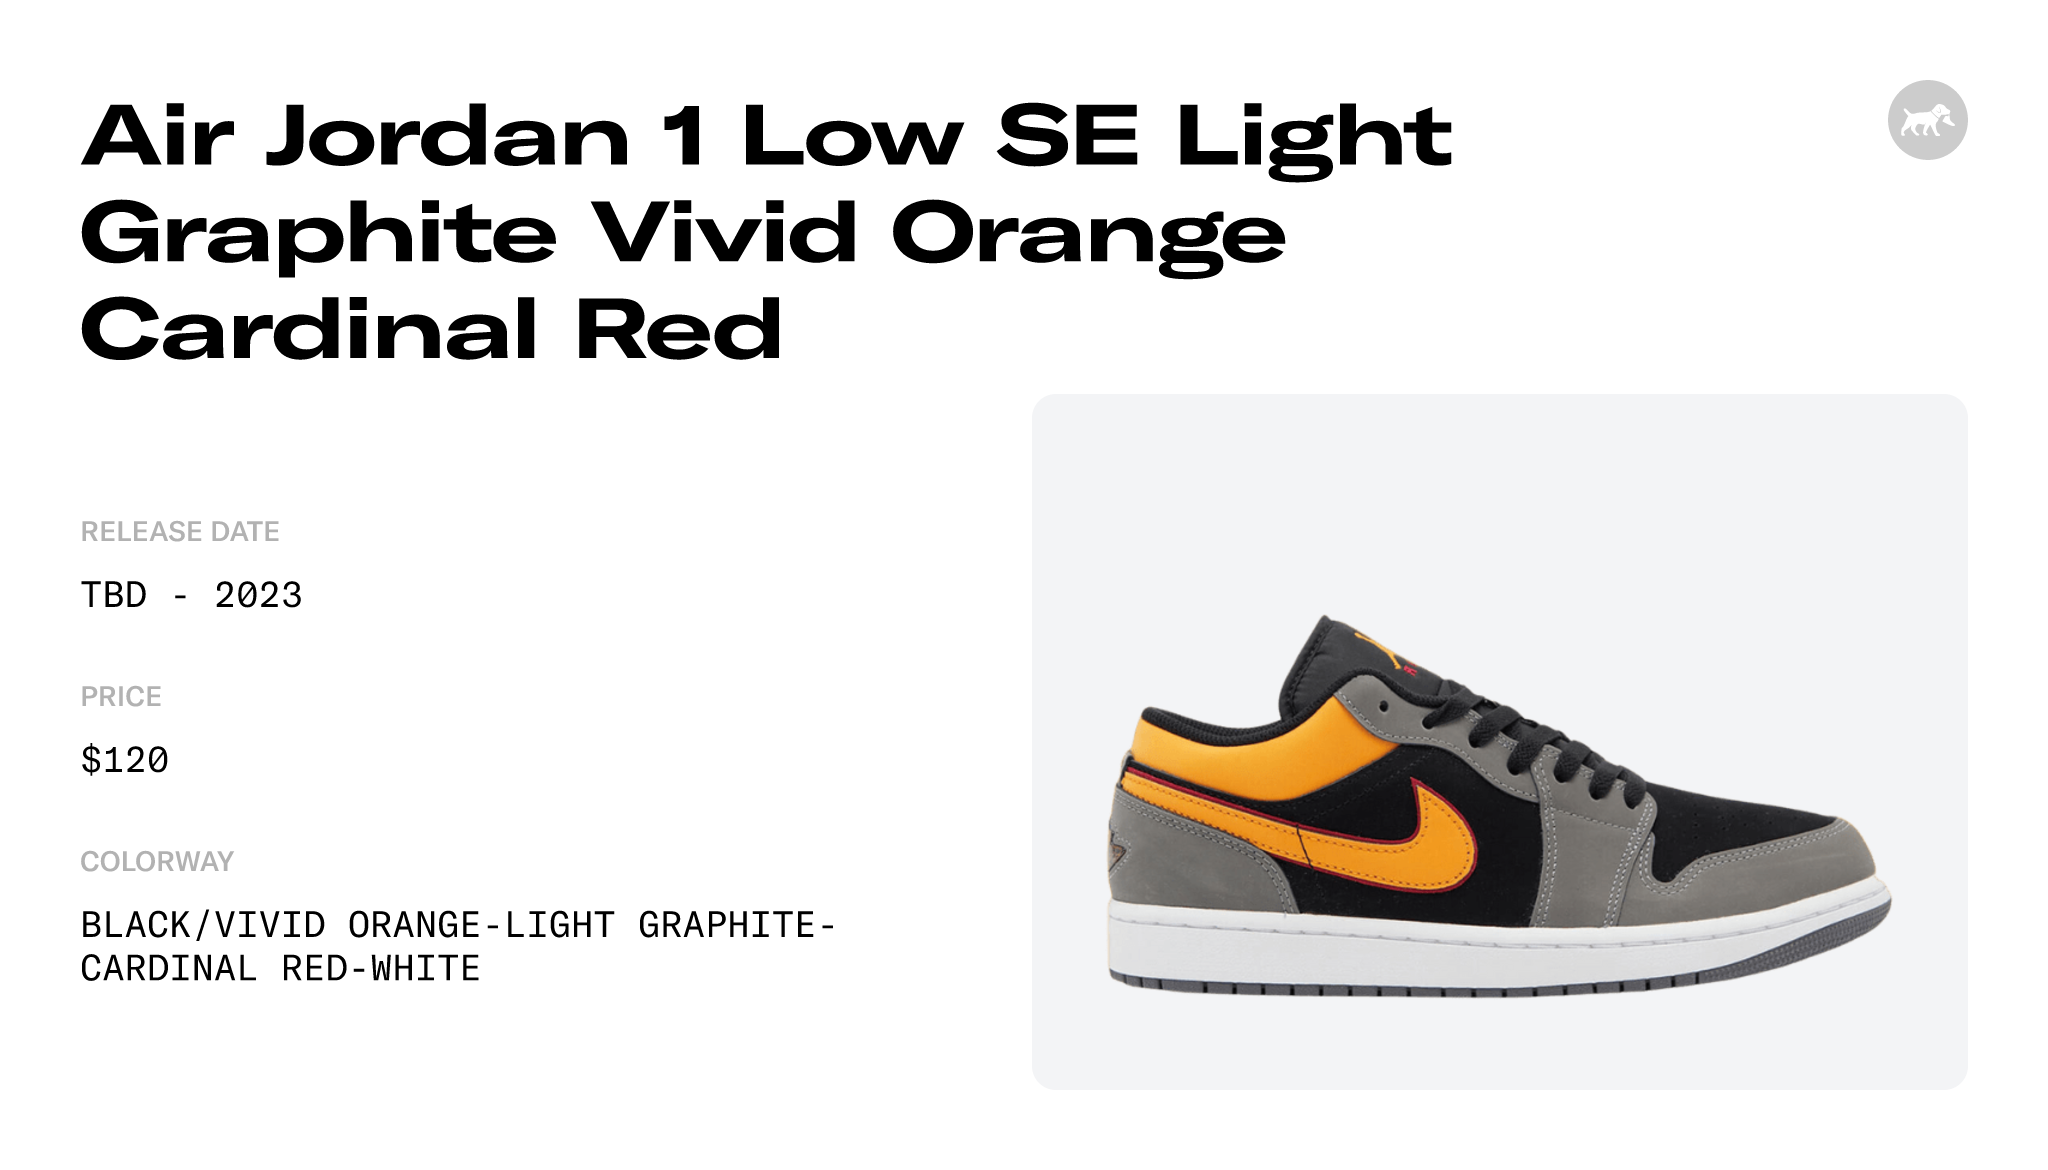 Air Jordan 1 Low SE Light Graphite Vivid Orange Cardinal Red